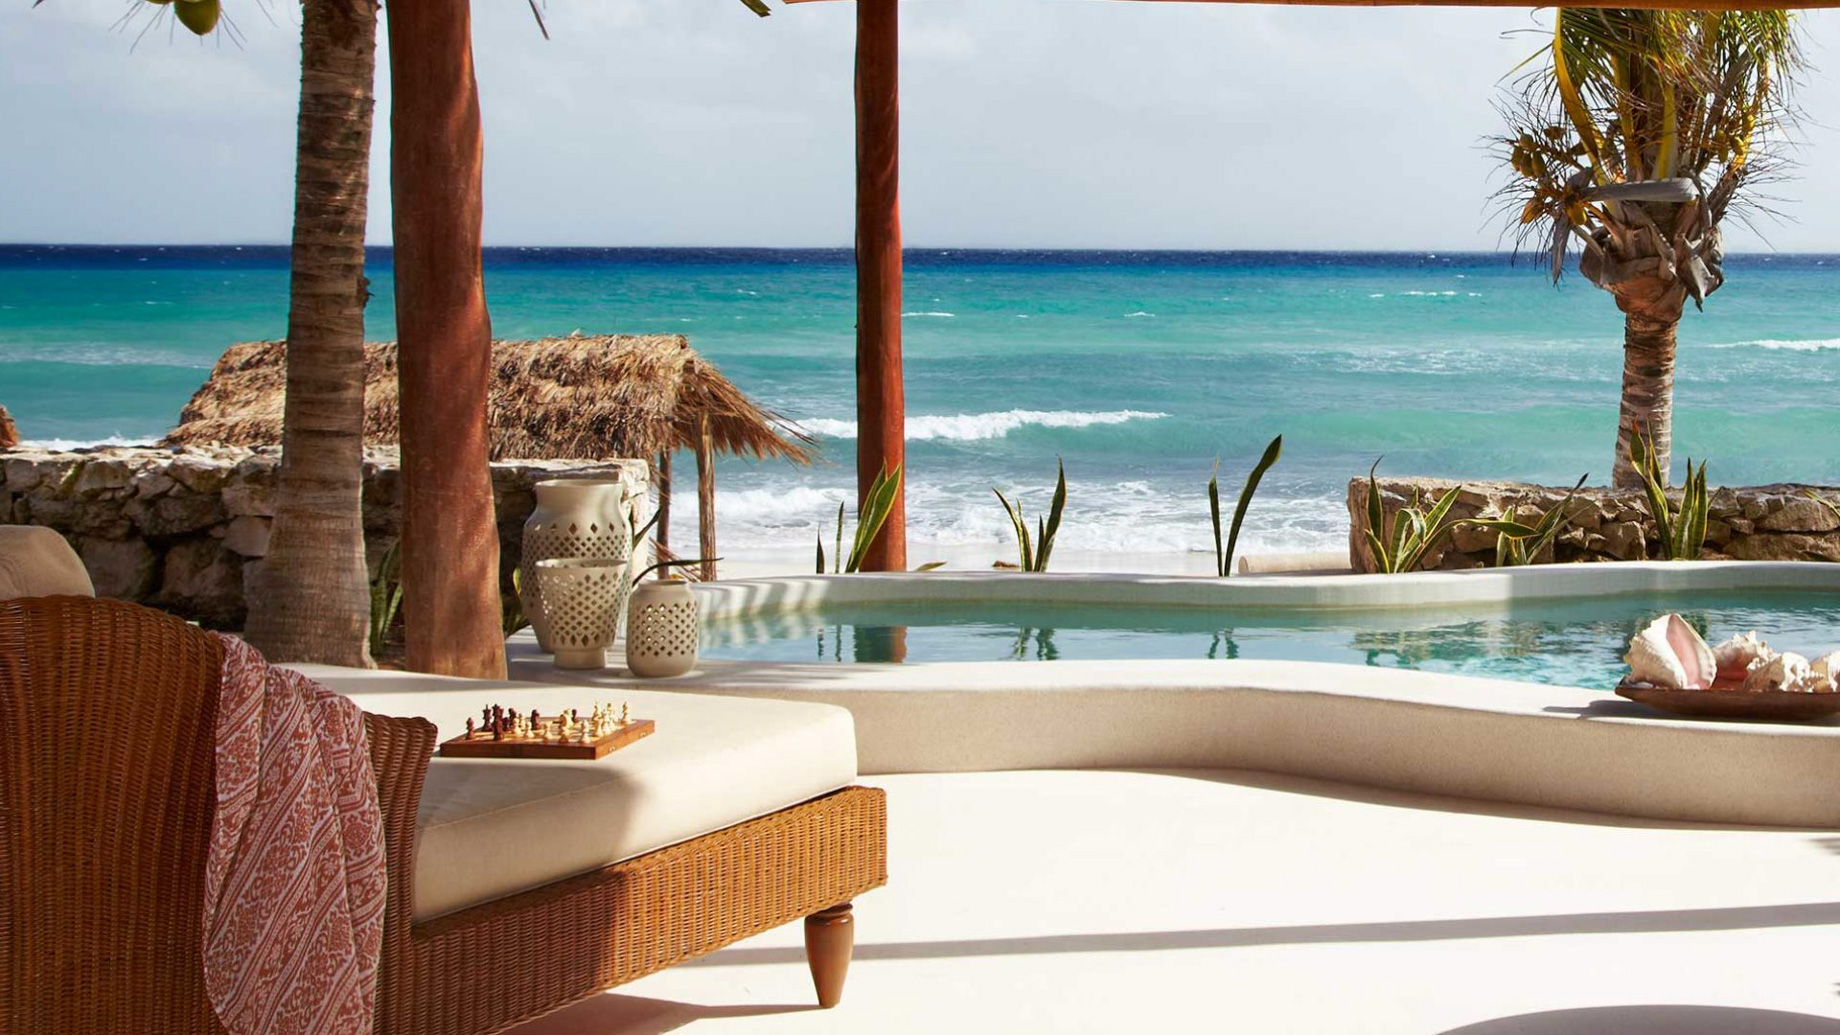 Viceroy Riviera Maya Resort - Playa del Carmen, Mexico - Beachfront Villa Pool Deck